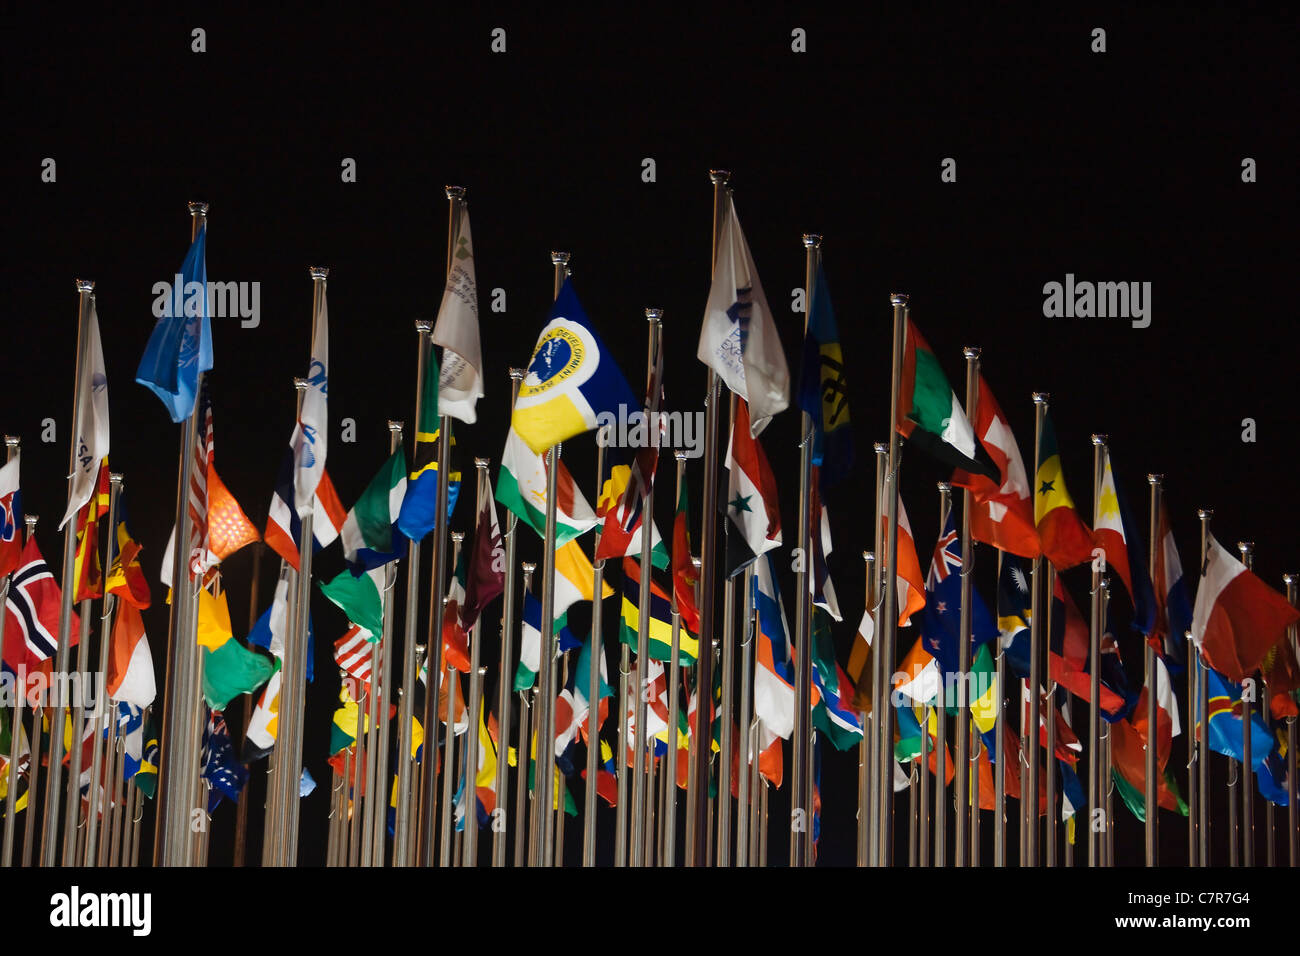 Night view of flag poles at 2010 World Expo, Shanghai, China Stock Photo